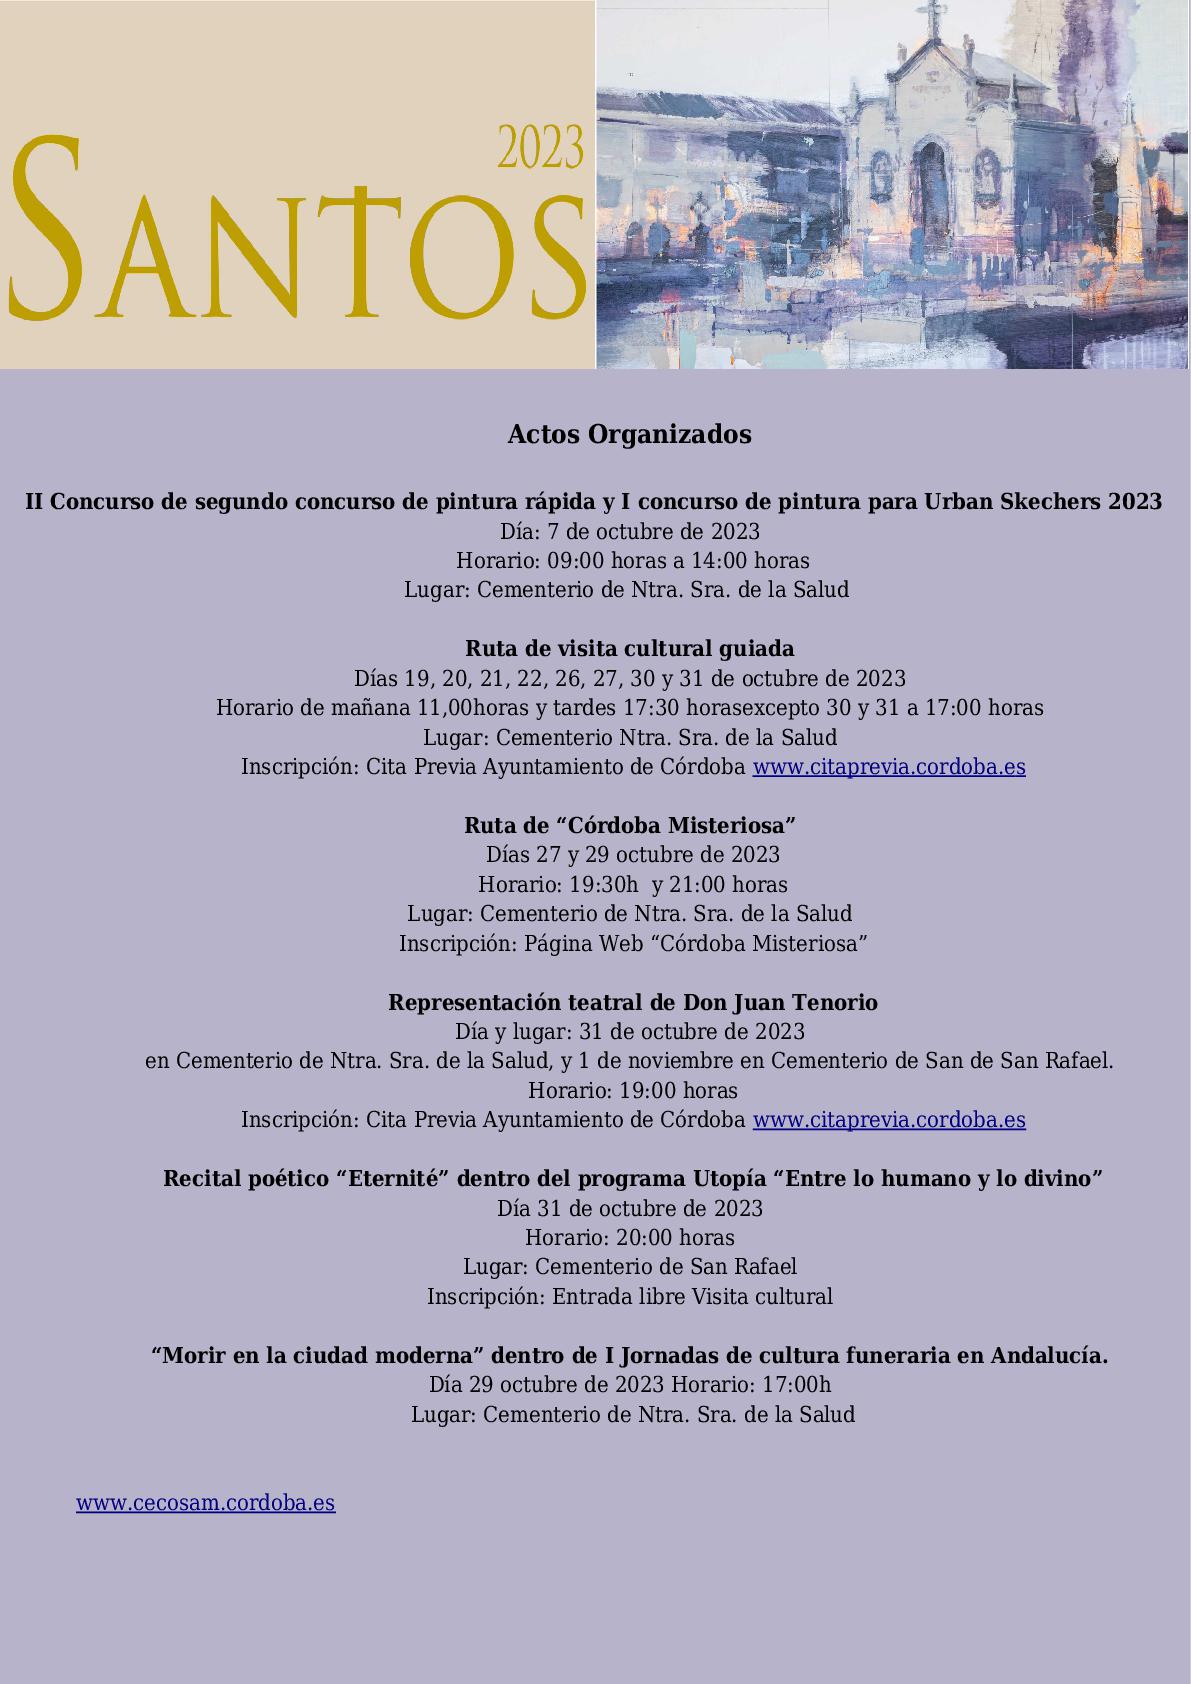 Cartel Santos 2023 definitivo.jpg - 208.03 KB